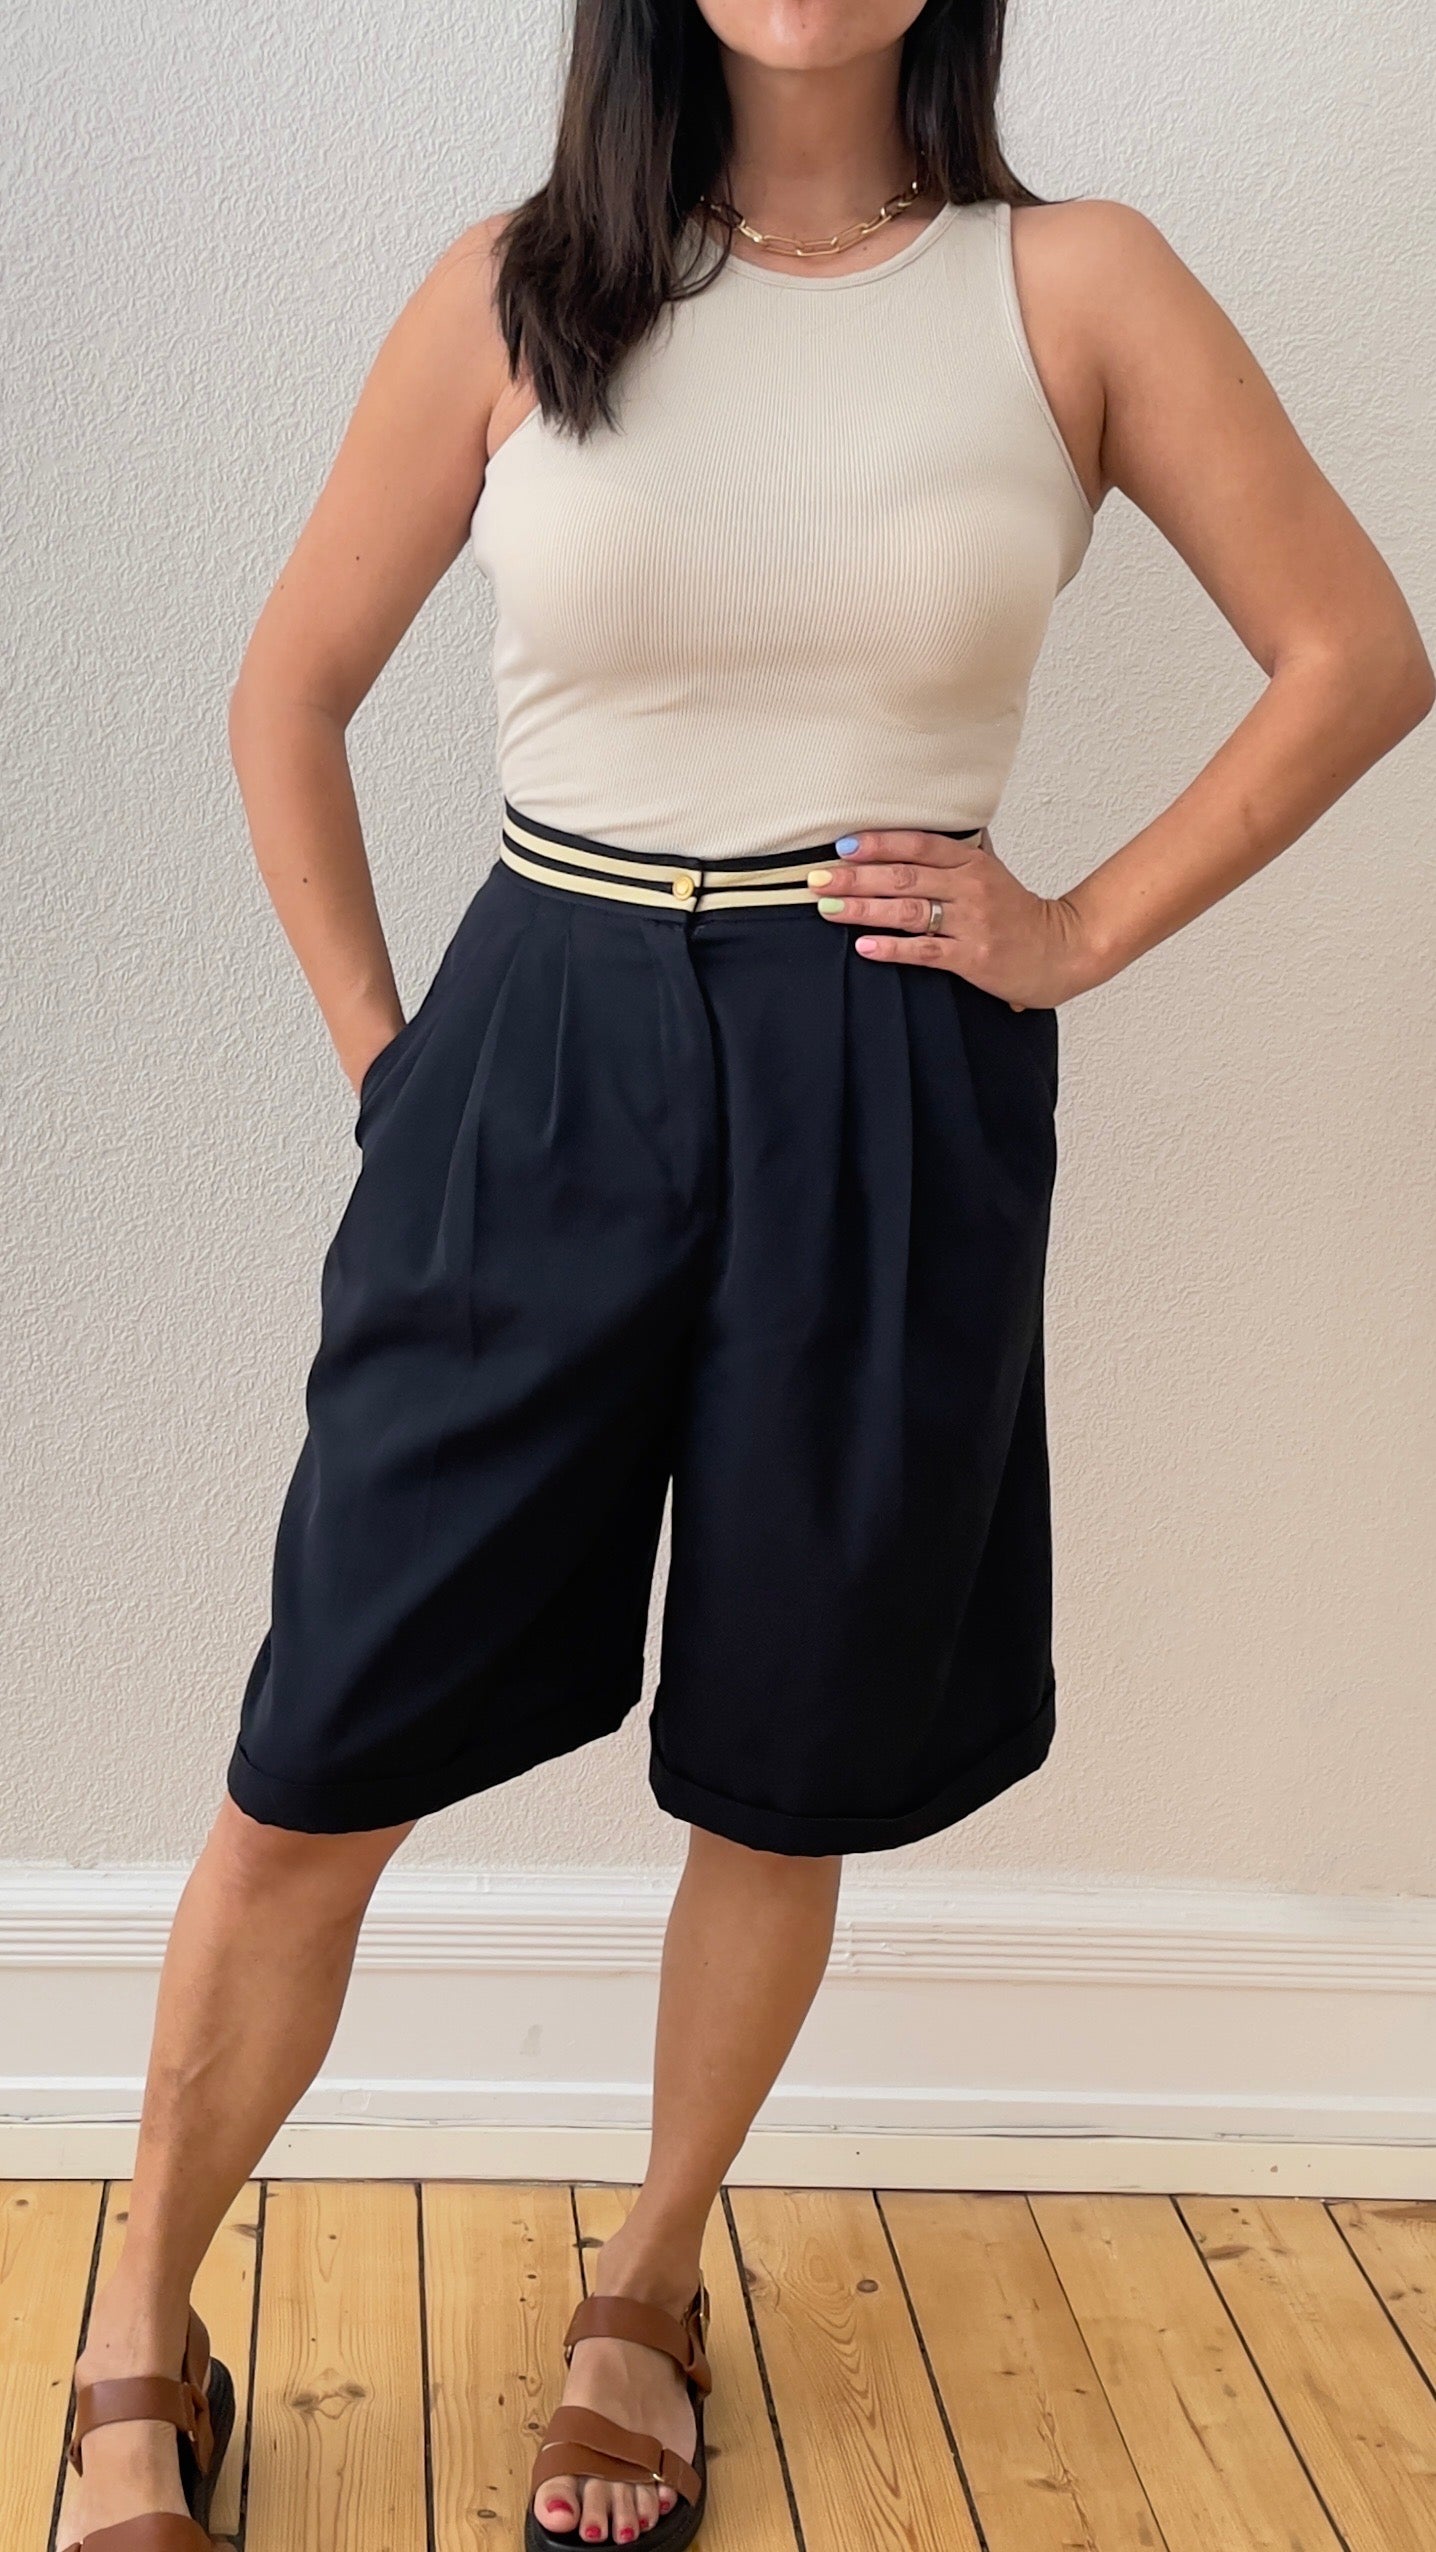 Vintage Navy Bermuda Shorts